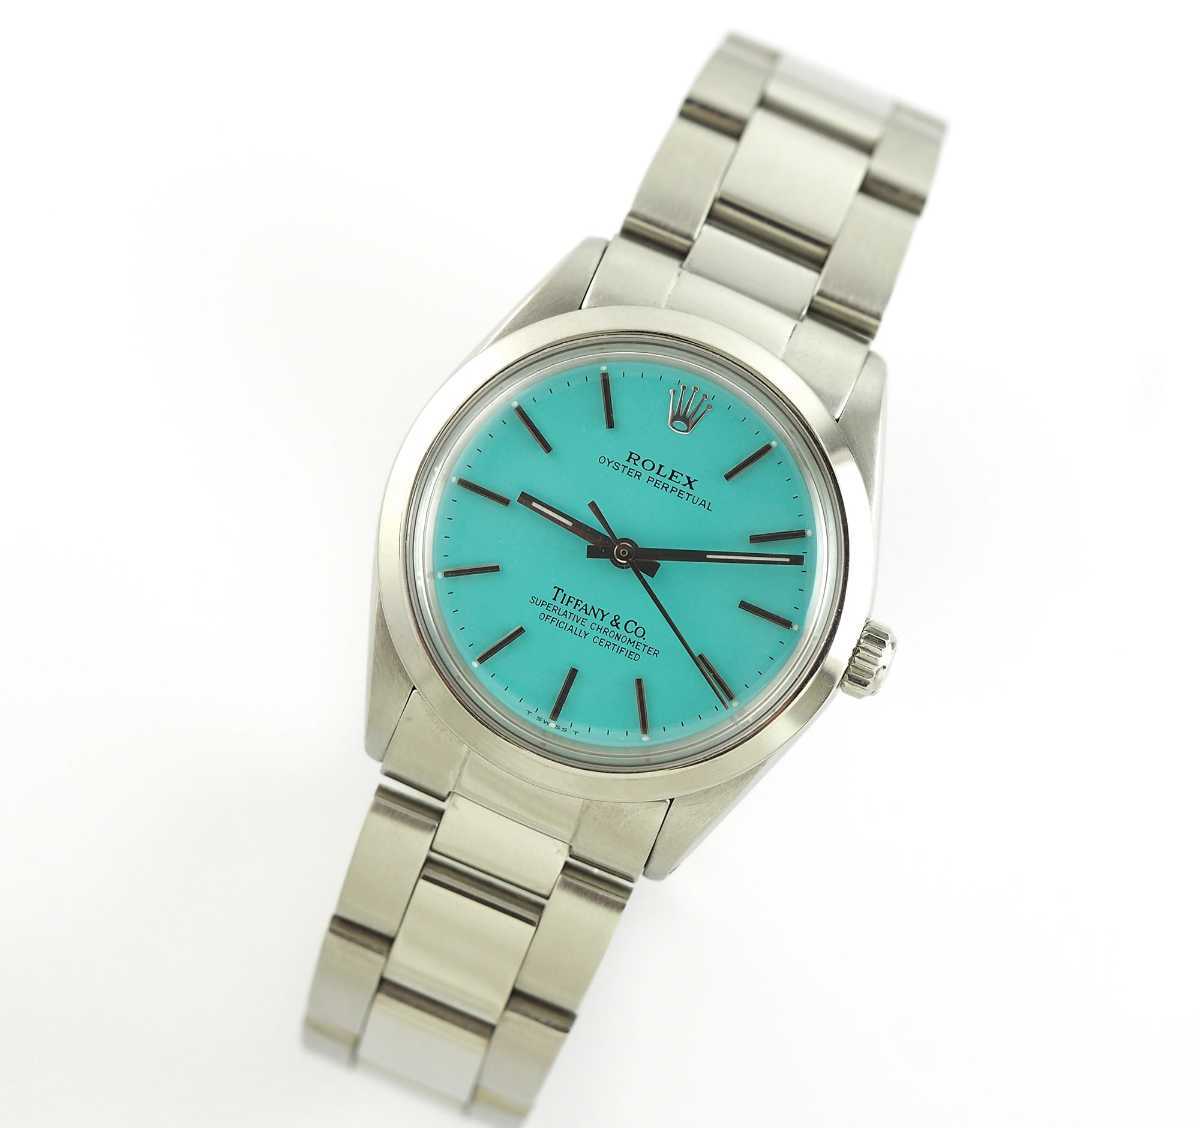 ROLEX 1002 ターコイズブルー 良品 ロレックス 1989年 cal.1570 自動巻き 稼働品 ビンテージ腕時計 Tiffany & Co. Turquoise Blue